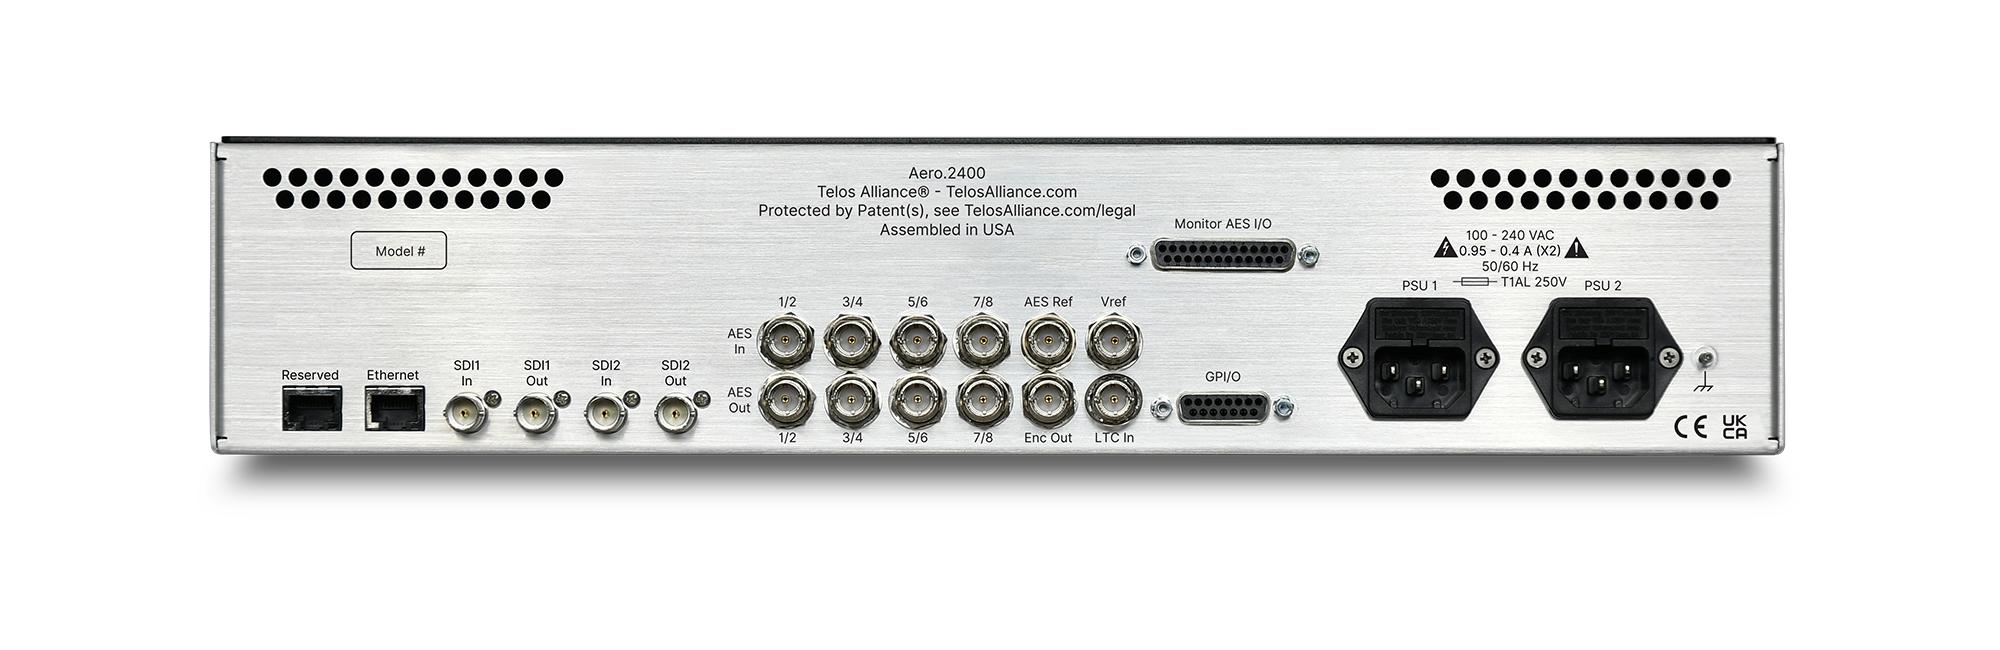 Linear Acoustic AERO.2400 DTV Audio Processor